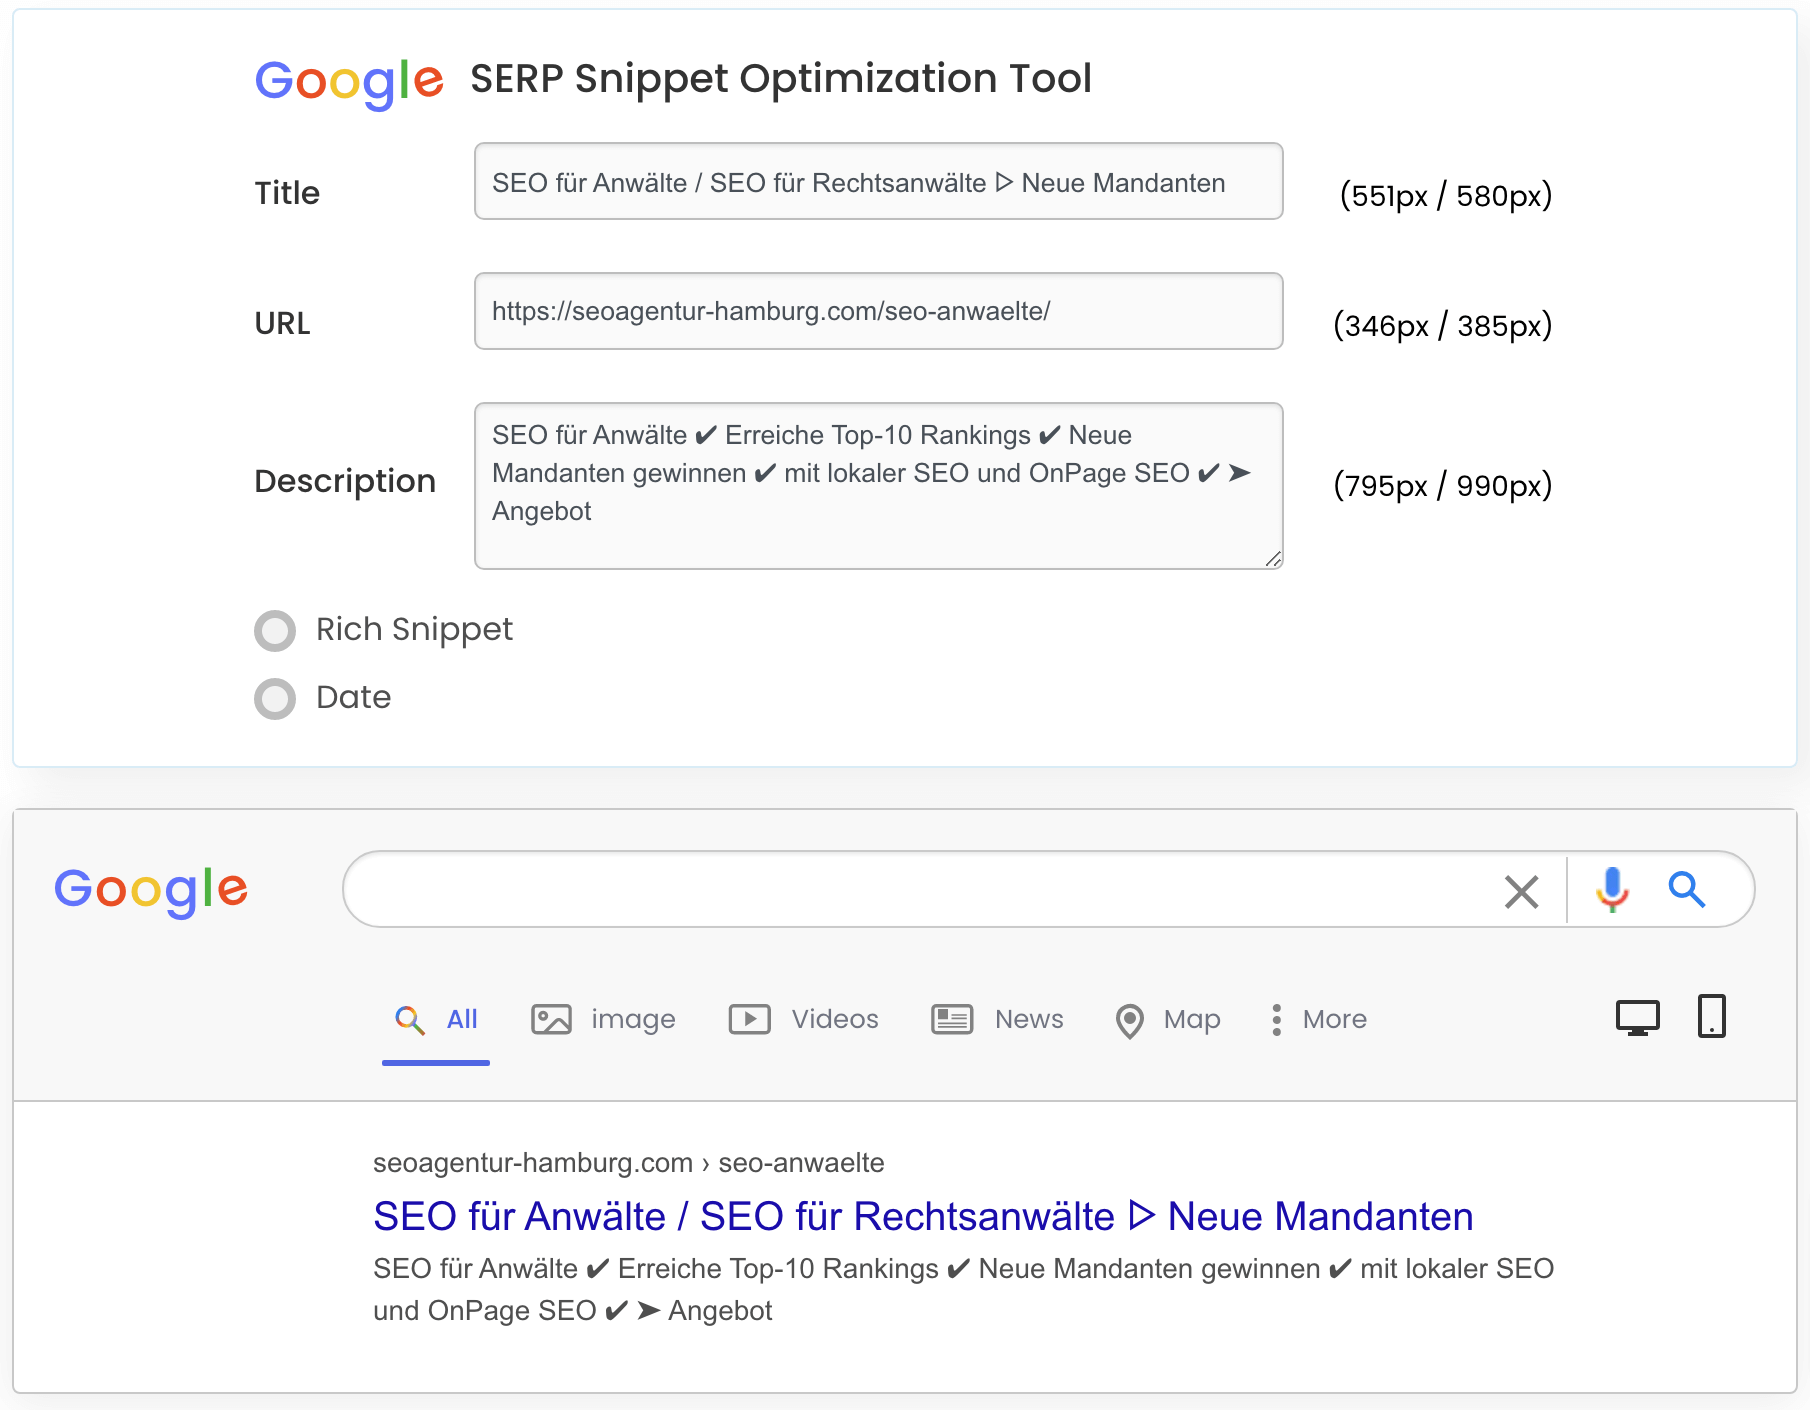 Die besten SEO Tools: Das Google SERP Snippet Optimization Tool